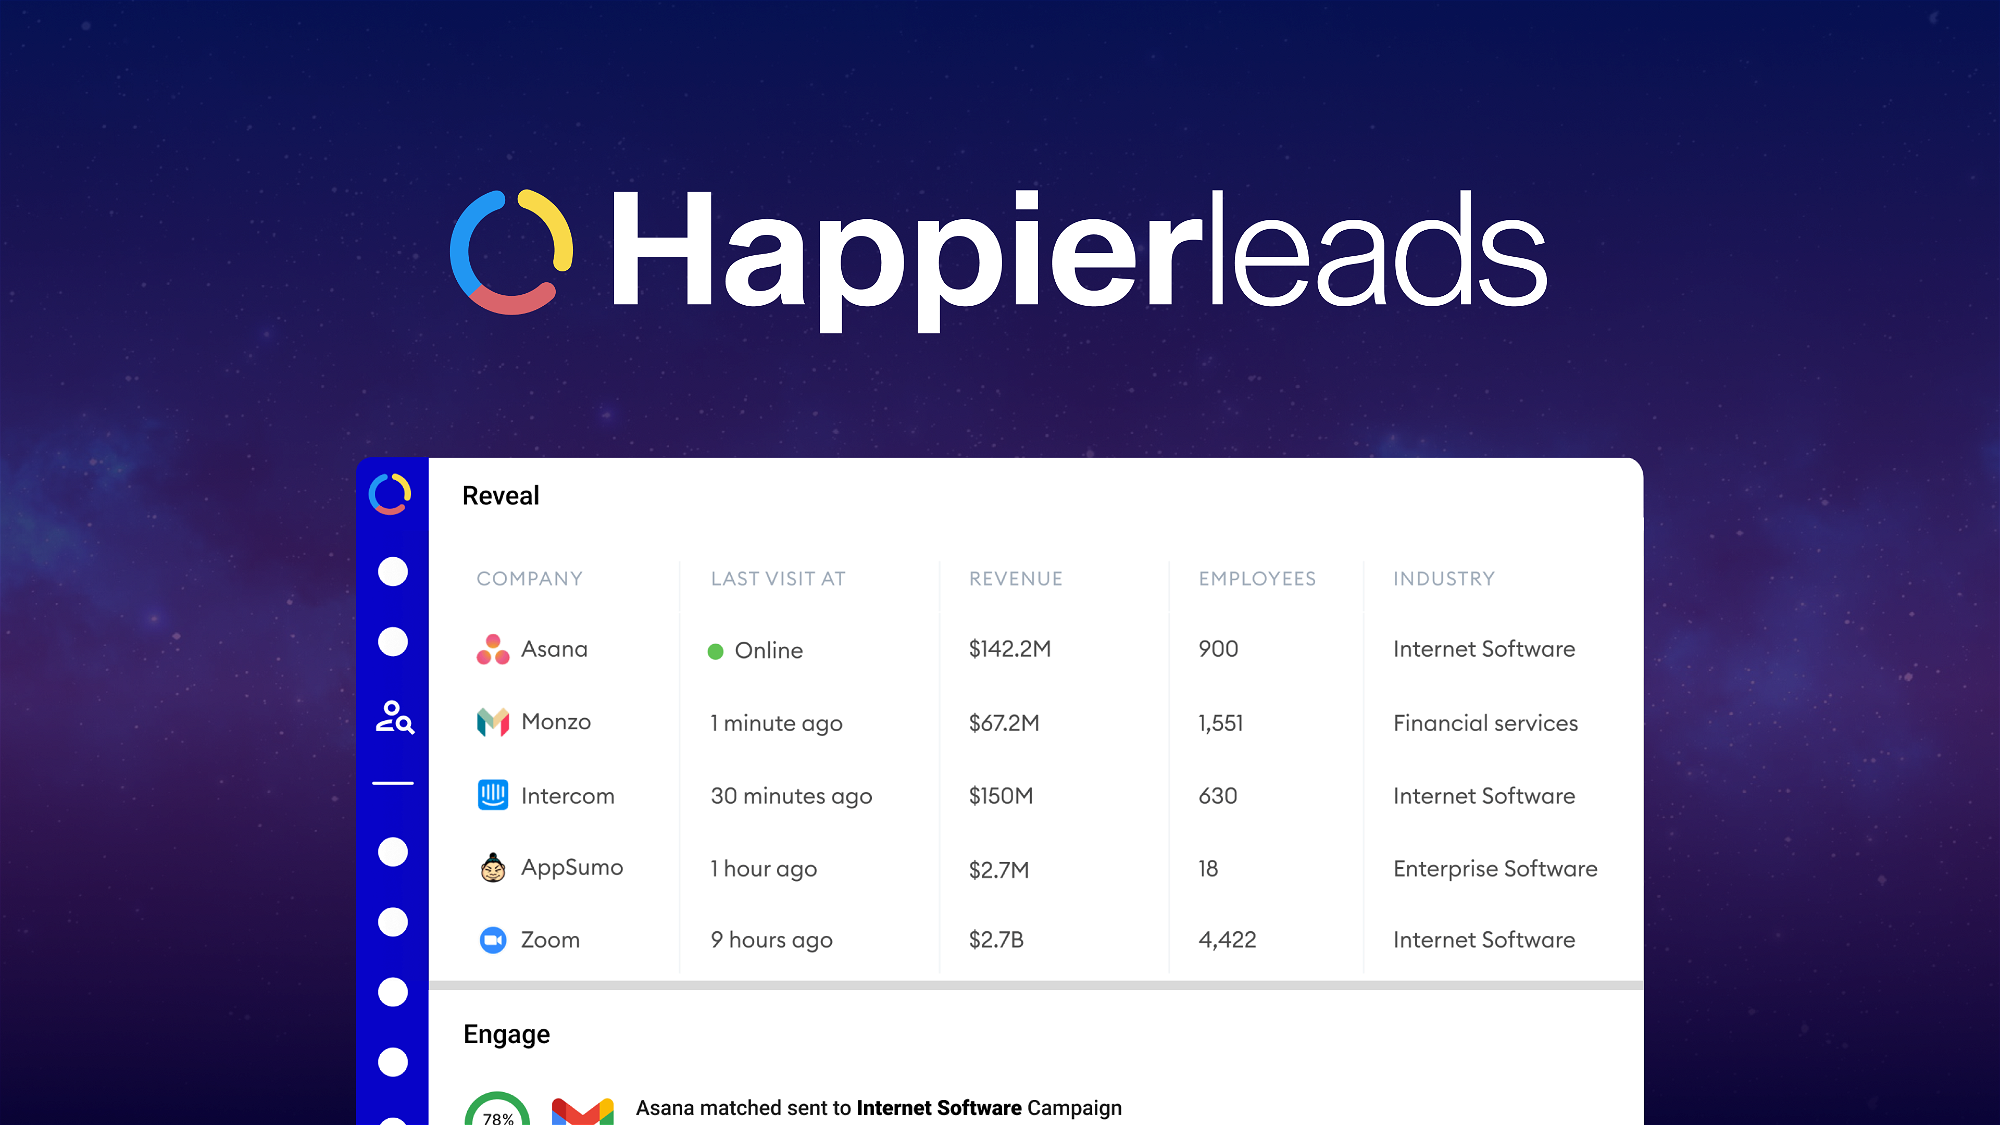 Happierleads – LIFETIME Deals by appsumo